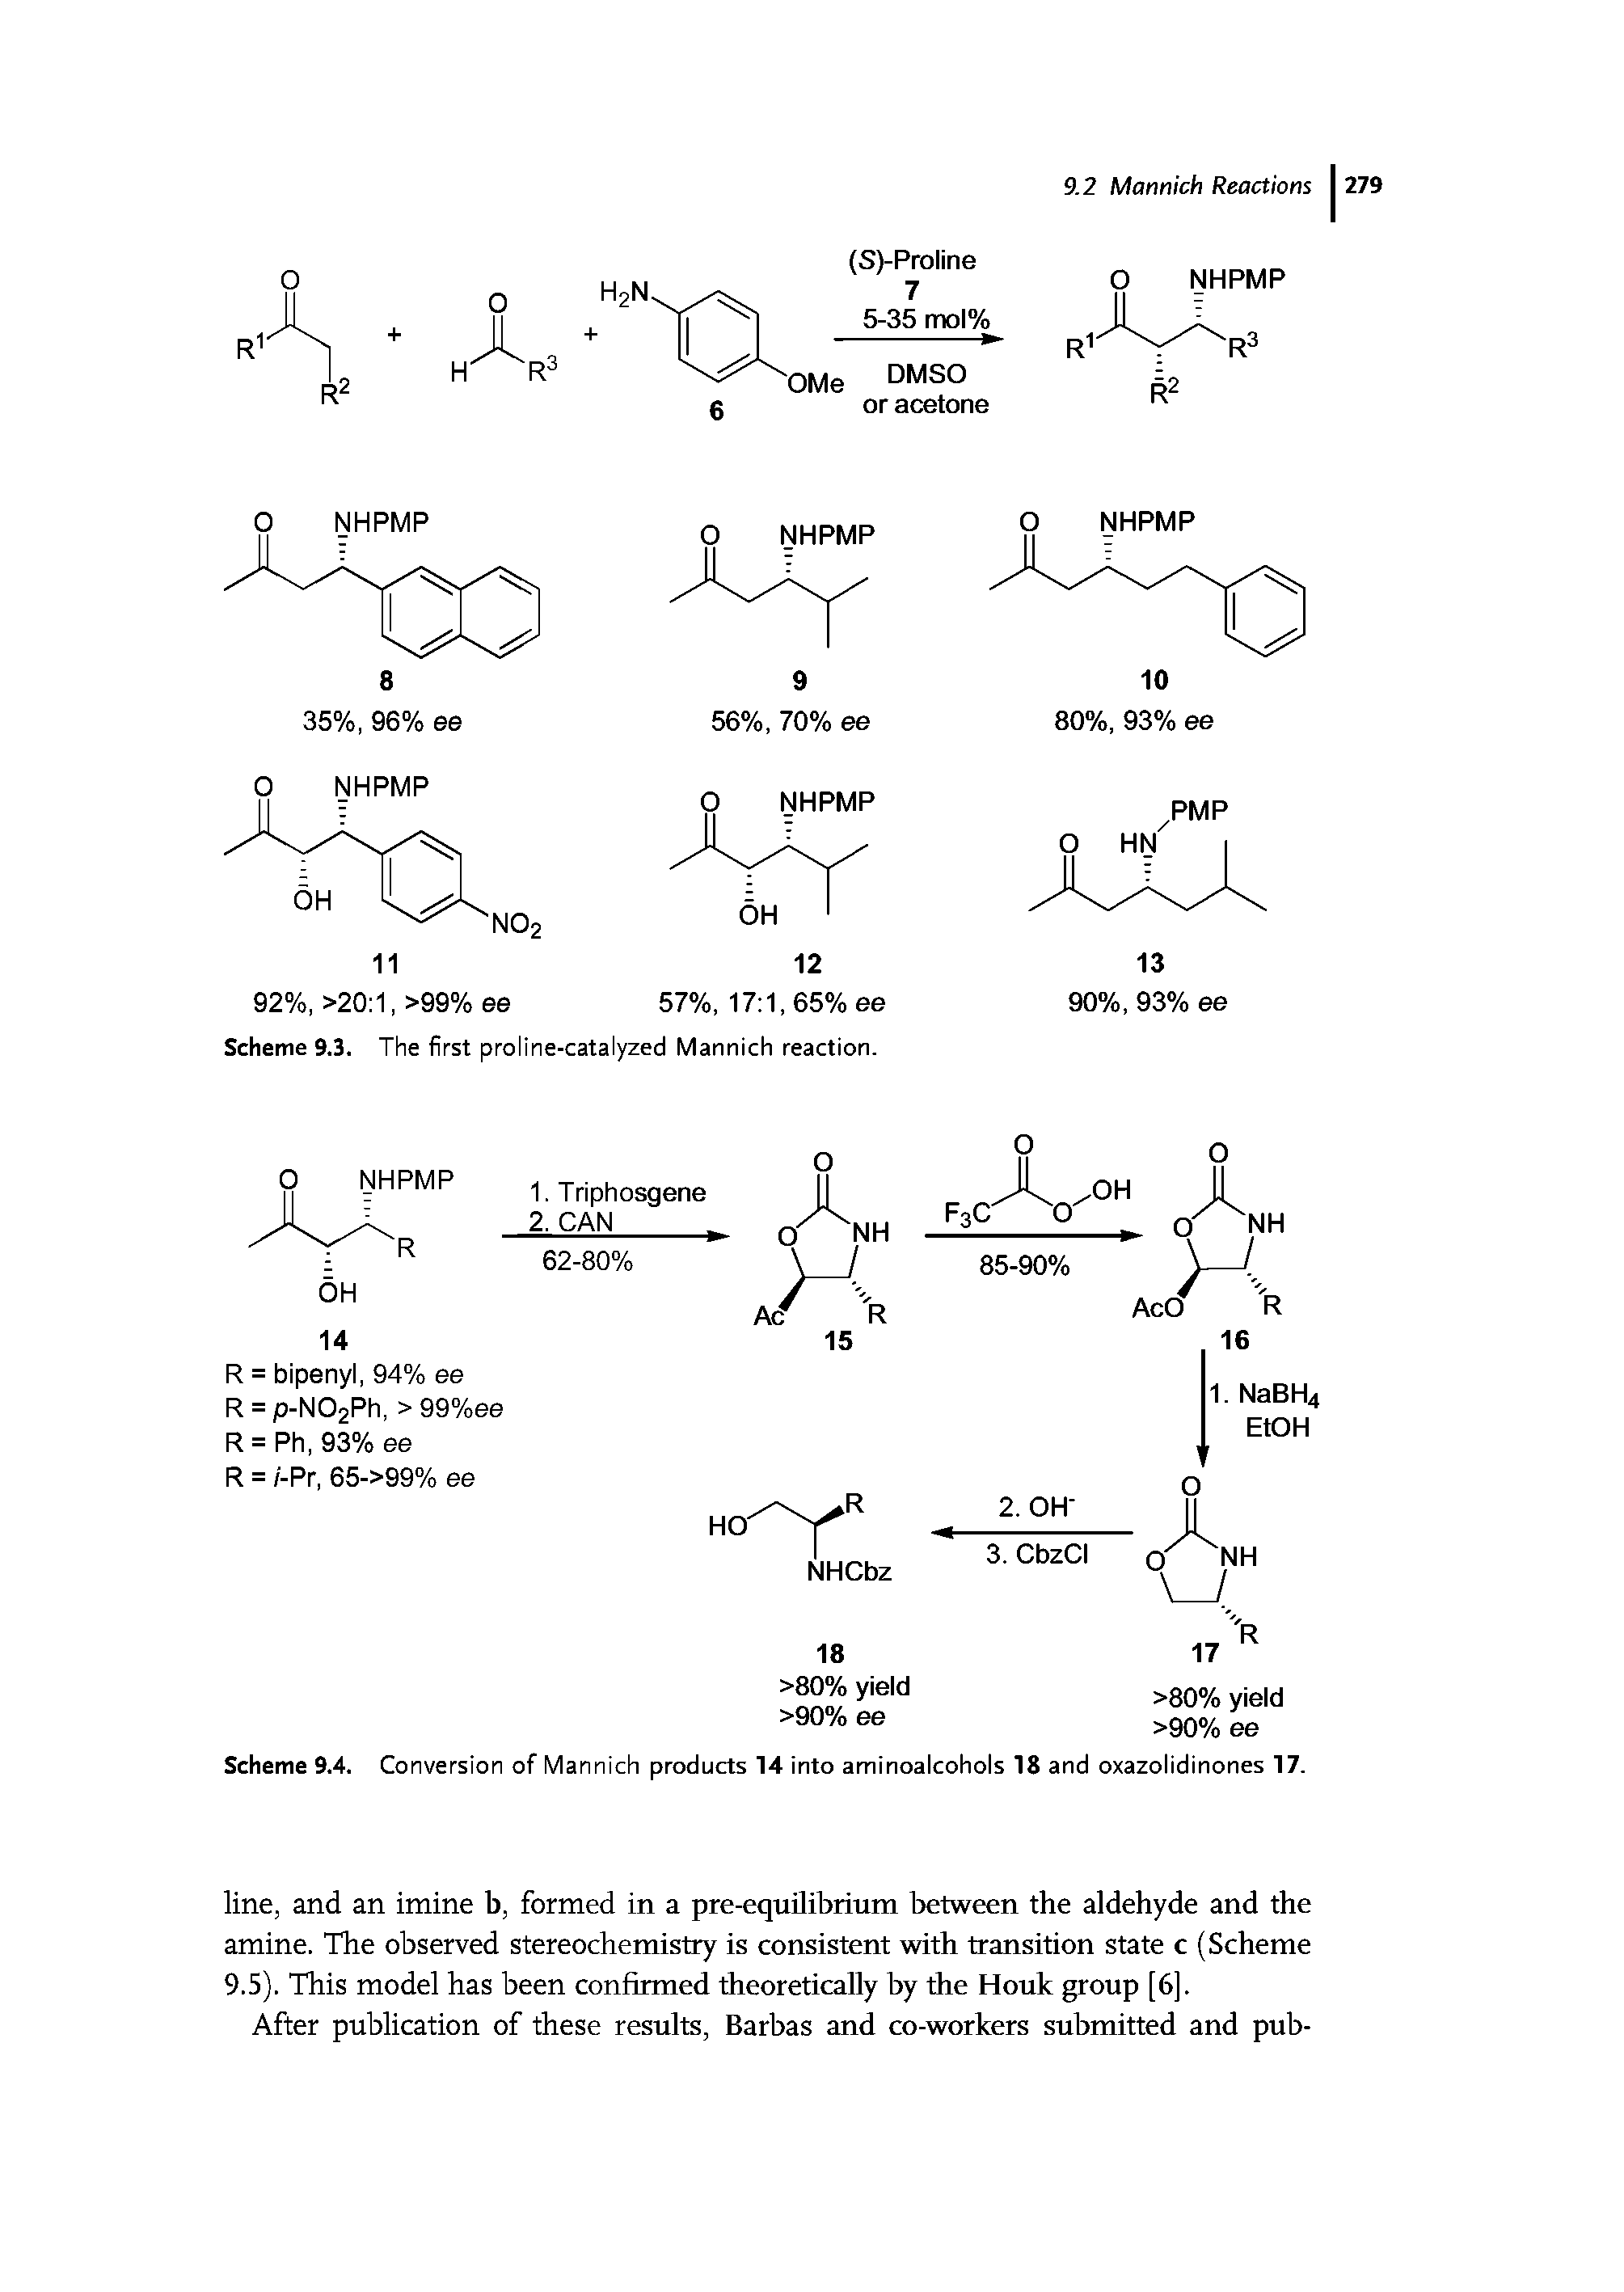 Scheme 9.3. The first proline-catalyzed Mannich reaction.